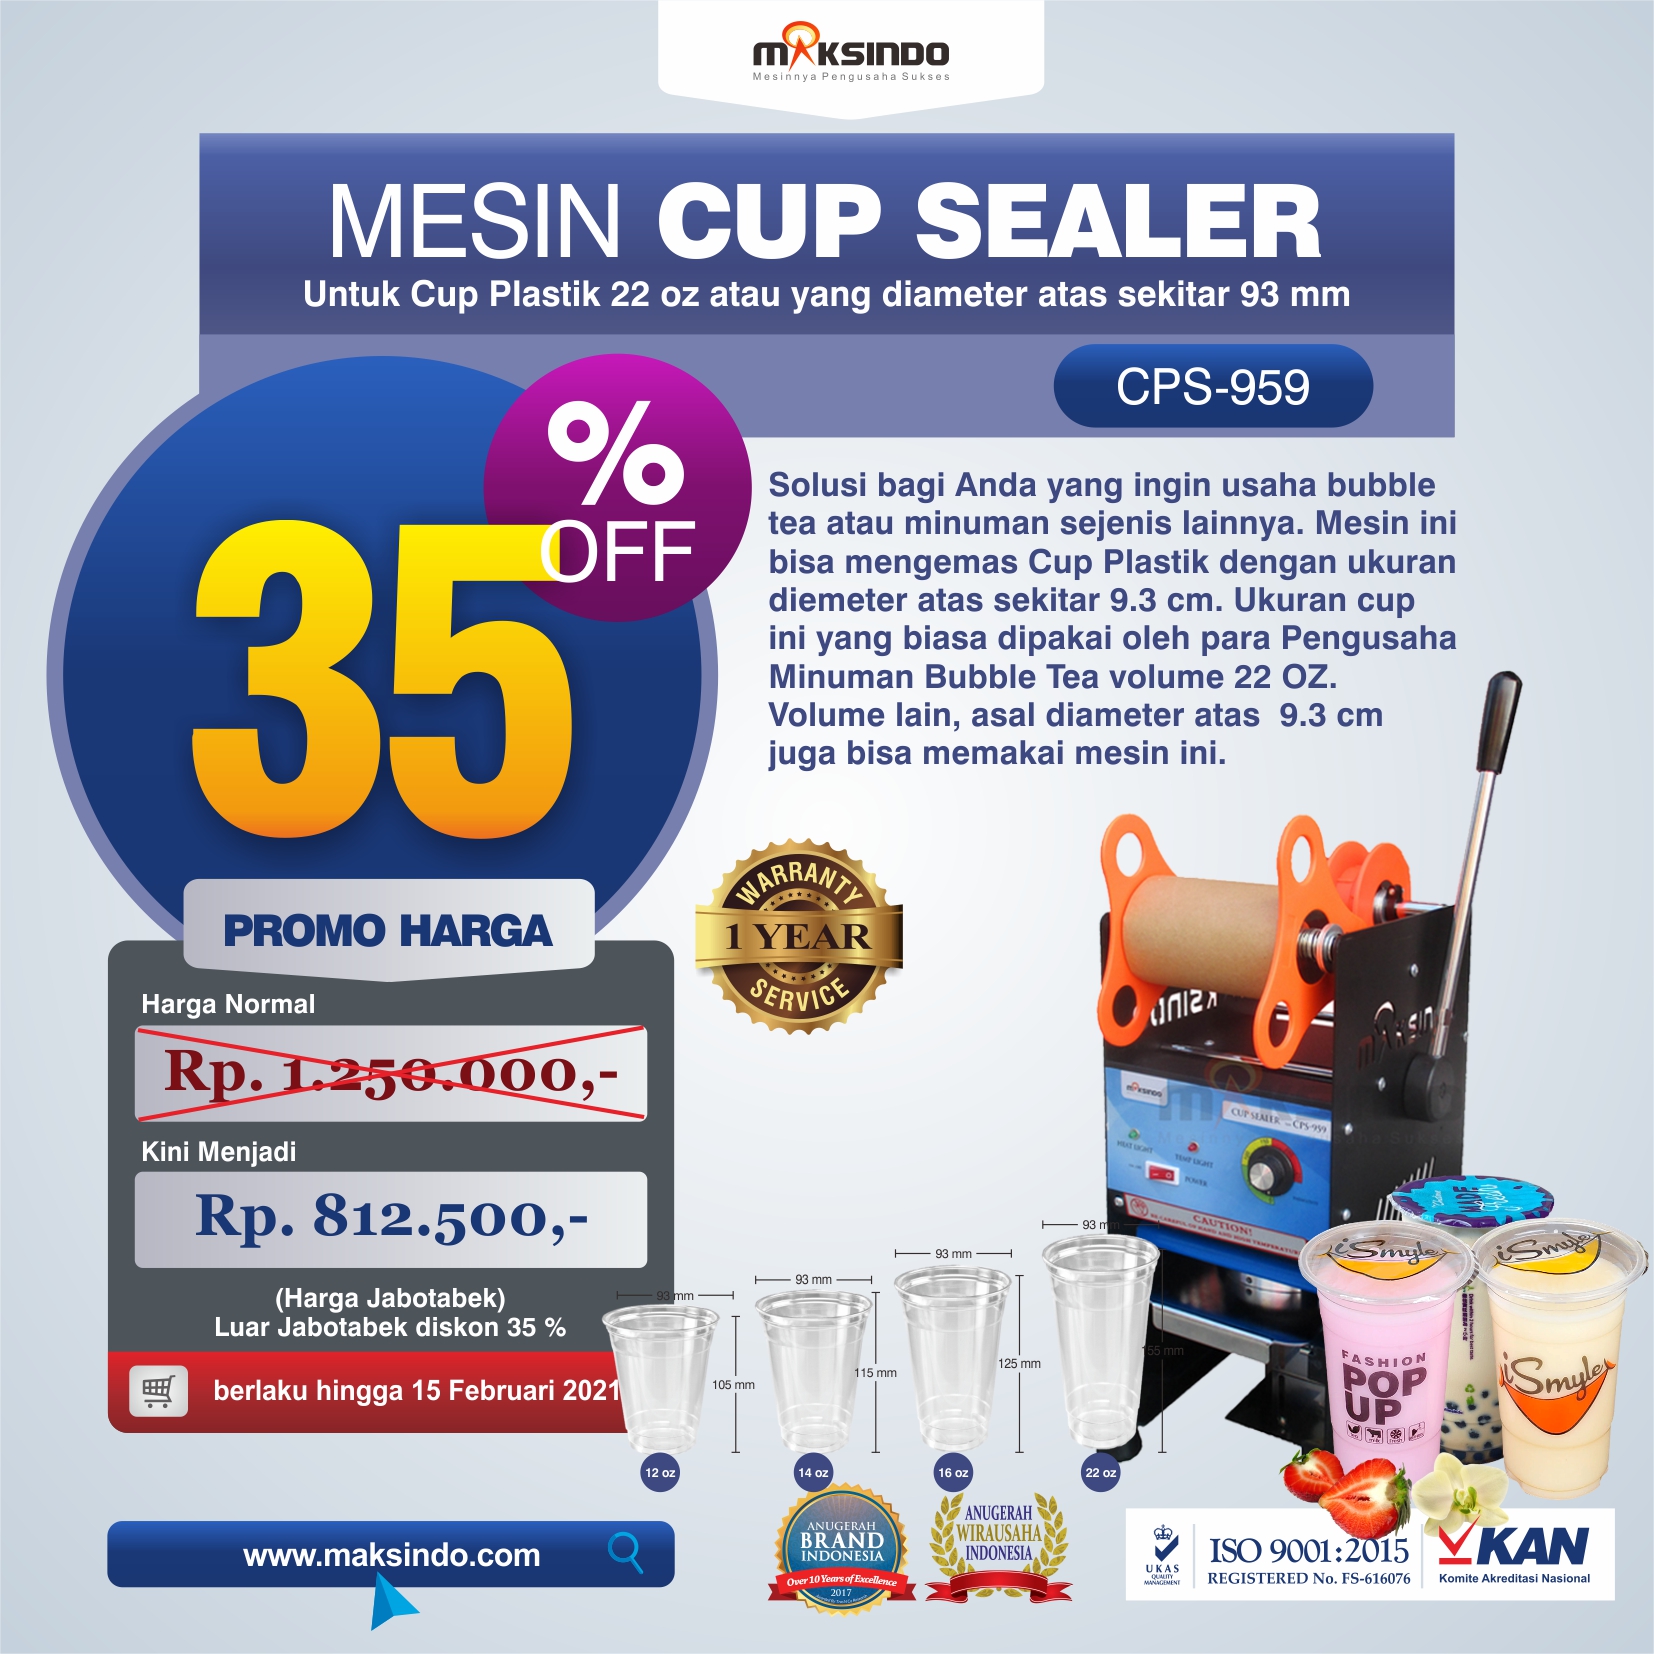 Mesin Cup Sealer CPS-959